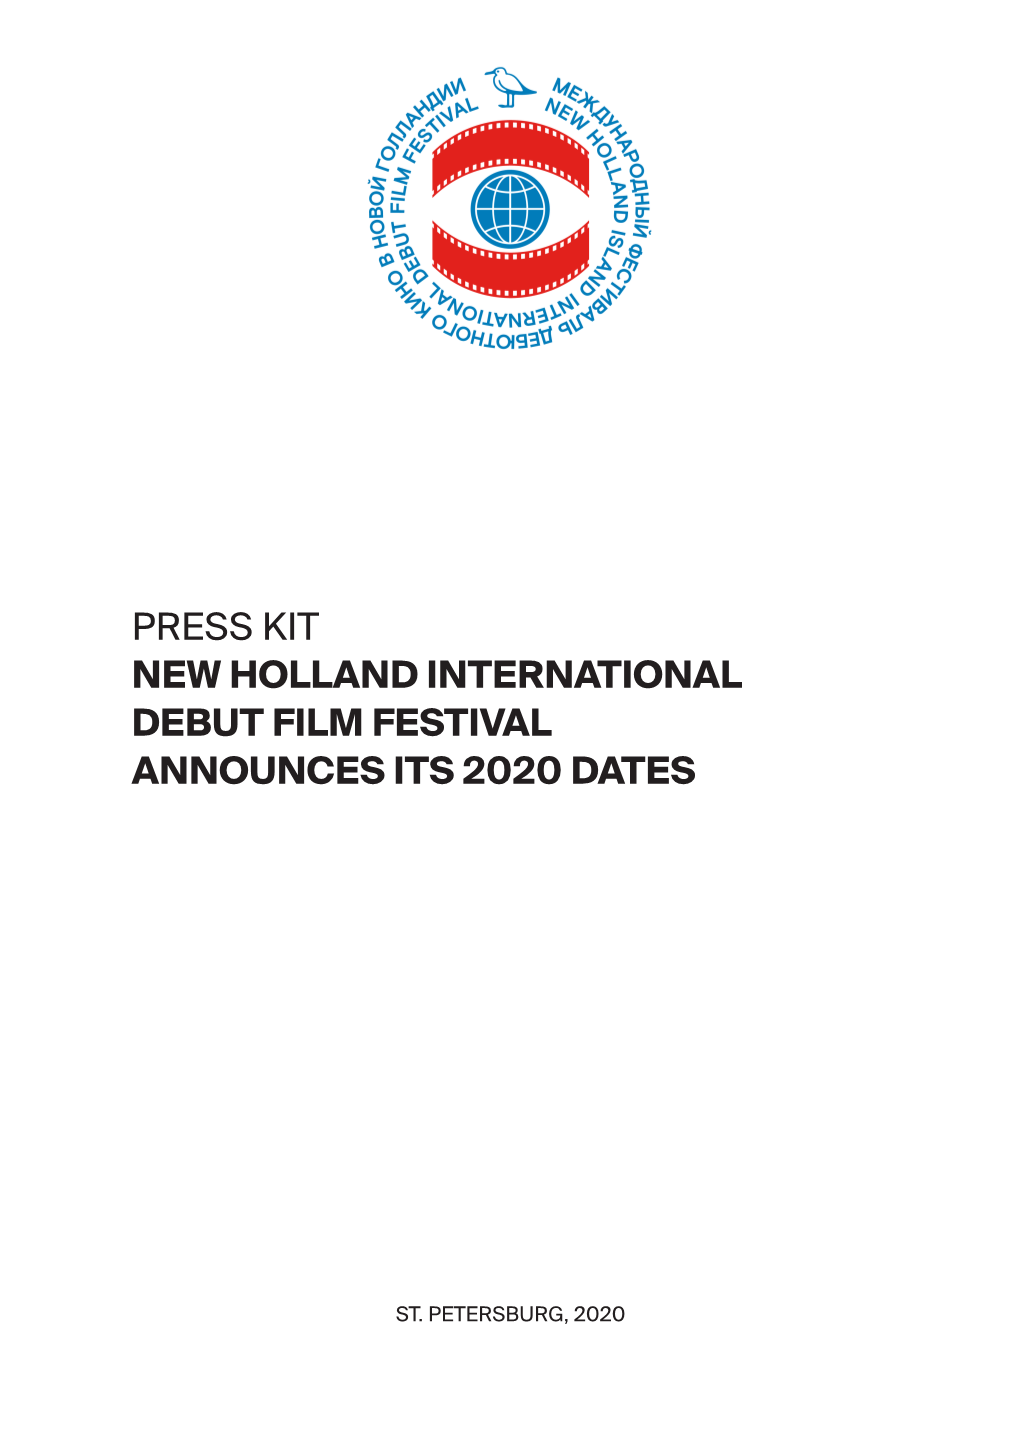 Press Kit New Holland International Debut Film Festival Announces Its 2020 Dates